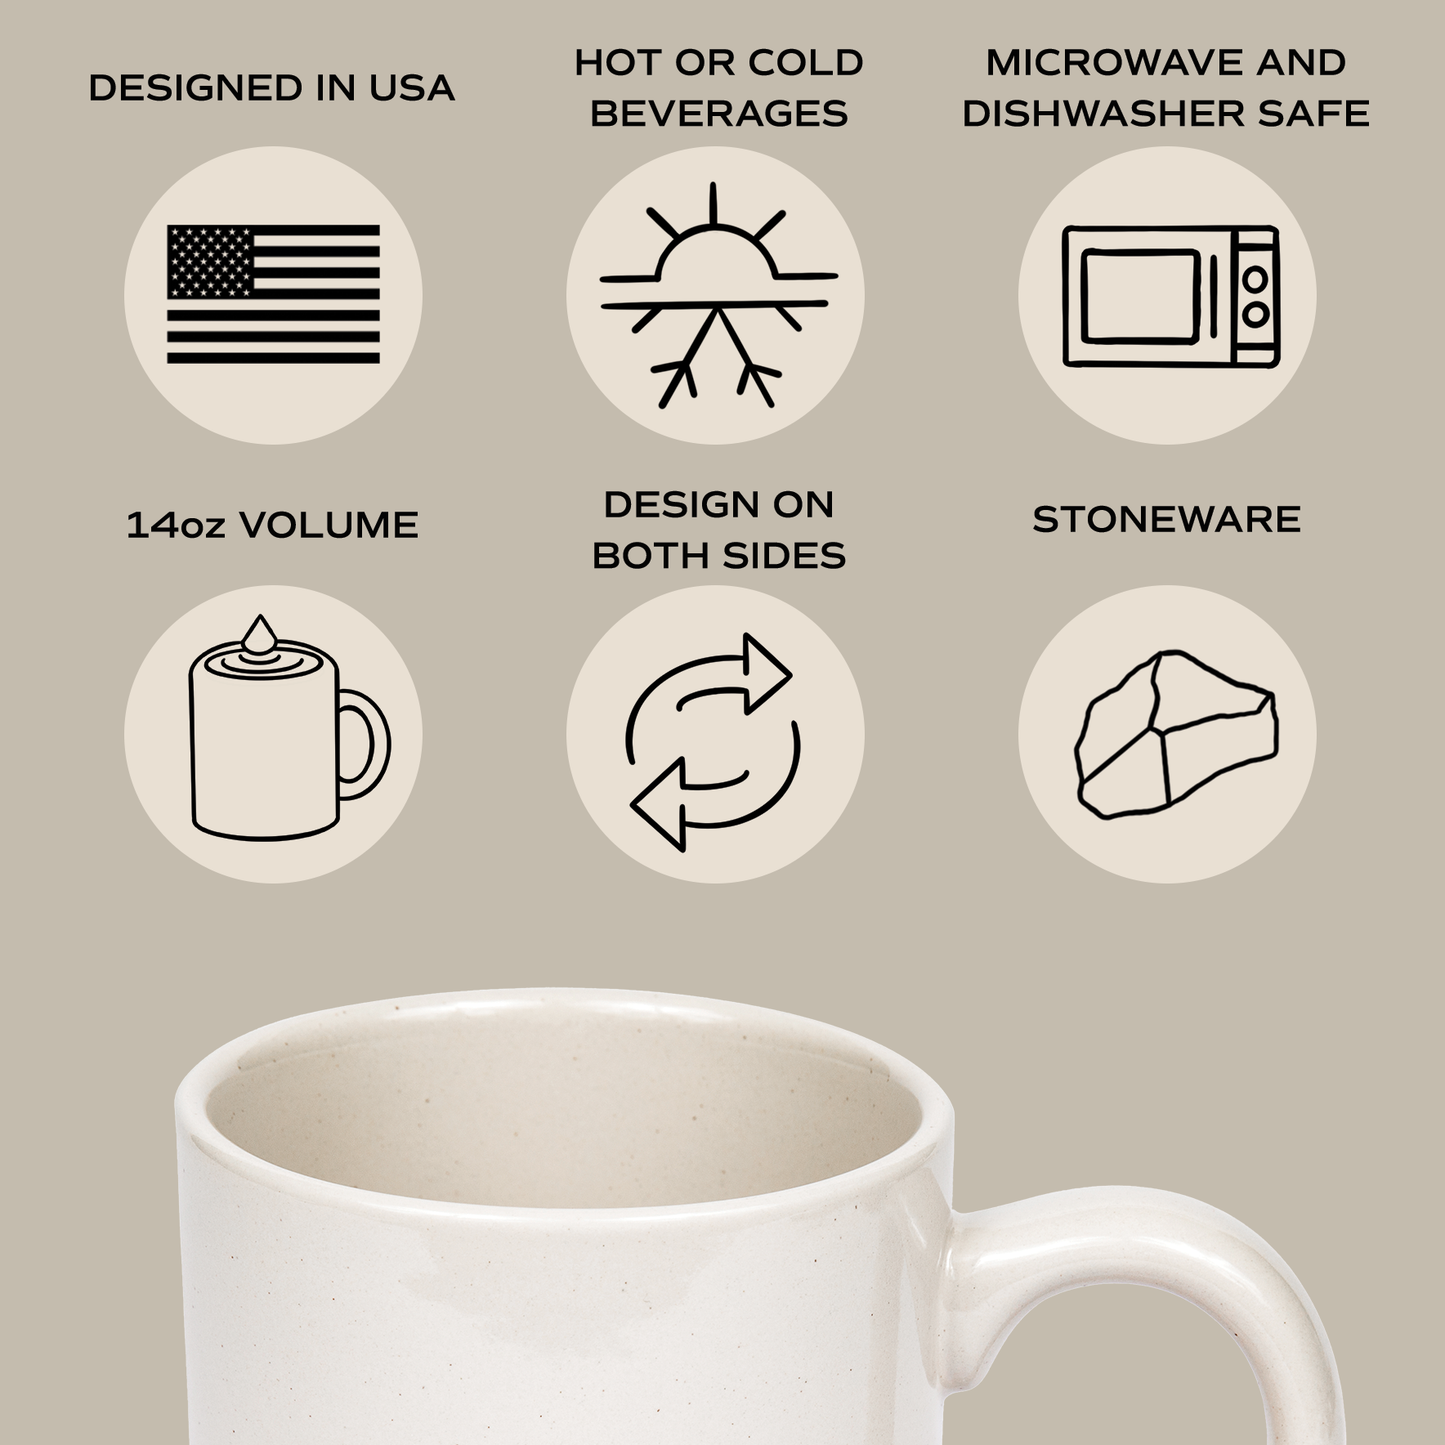 Dog Mom Stoneware Coffee Mug - Gifts & Home Decor